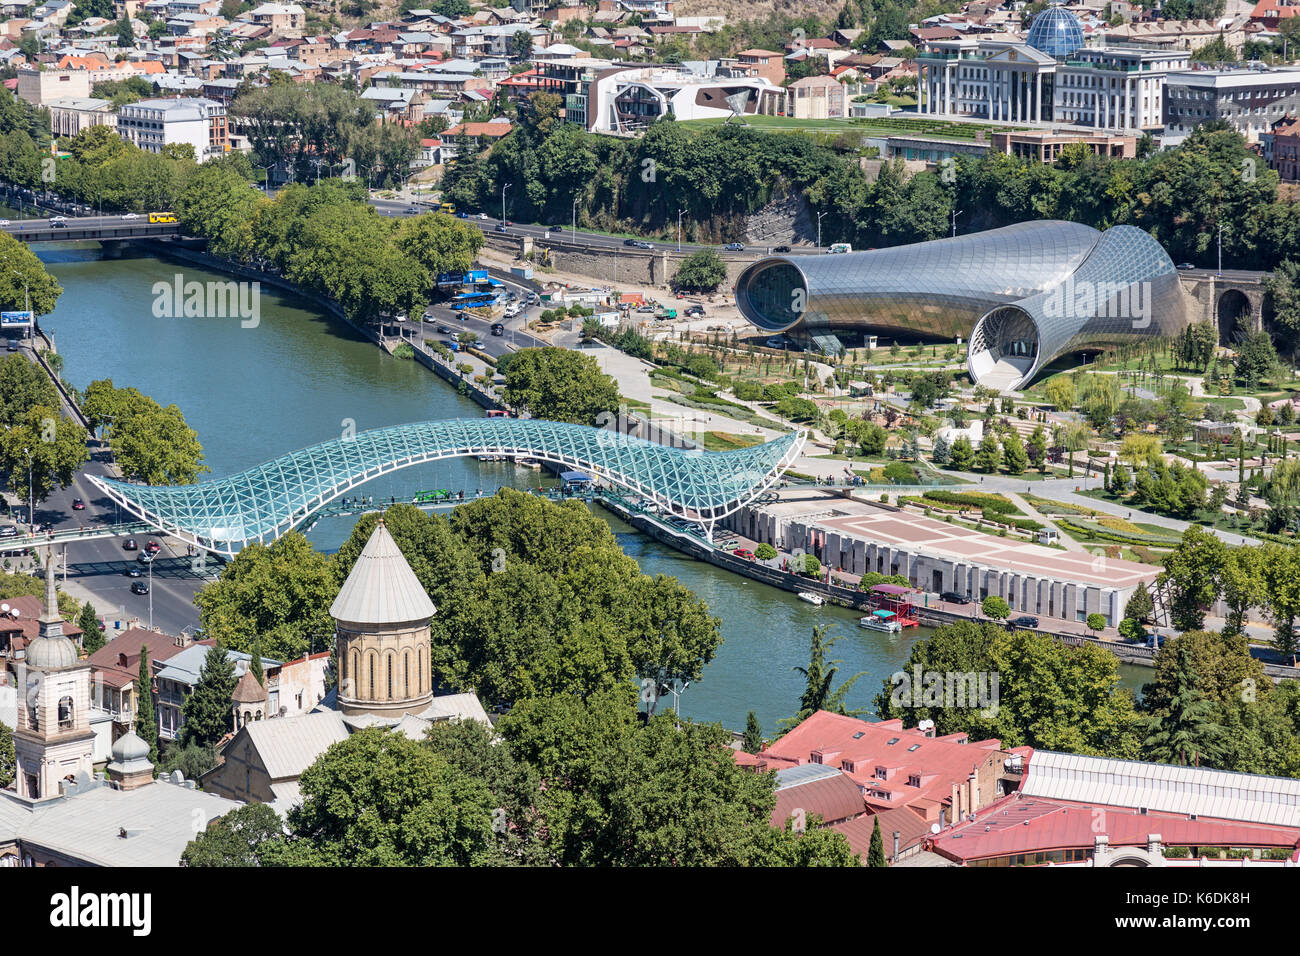 View across Tbilisi, capital city of Georgia, showing the Peace Bridge, Cultural Centre, and River Kura. Stock Photo